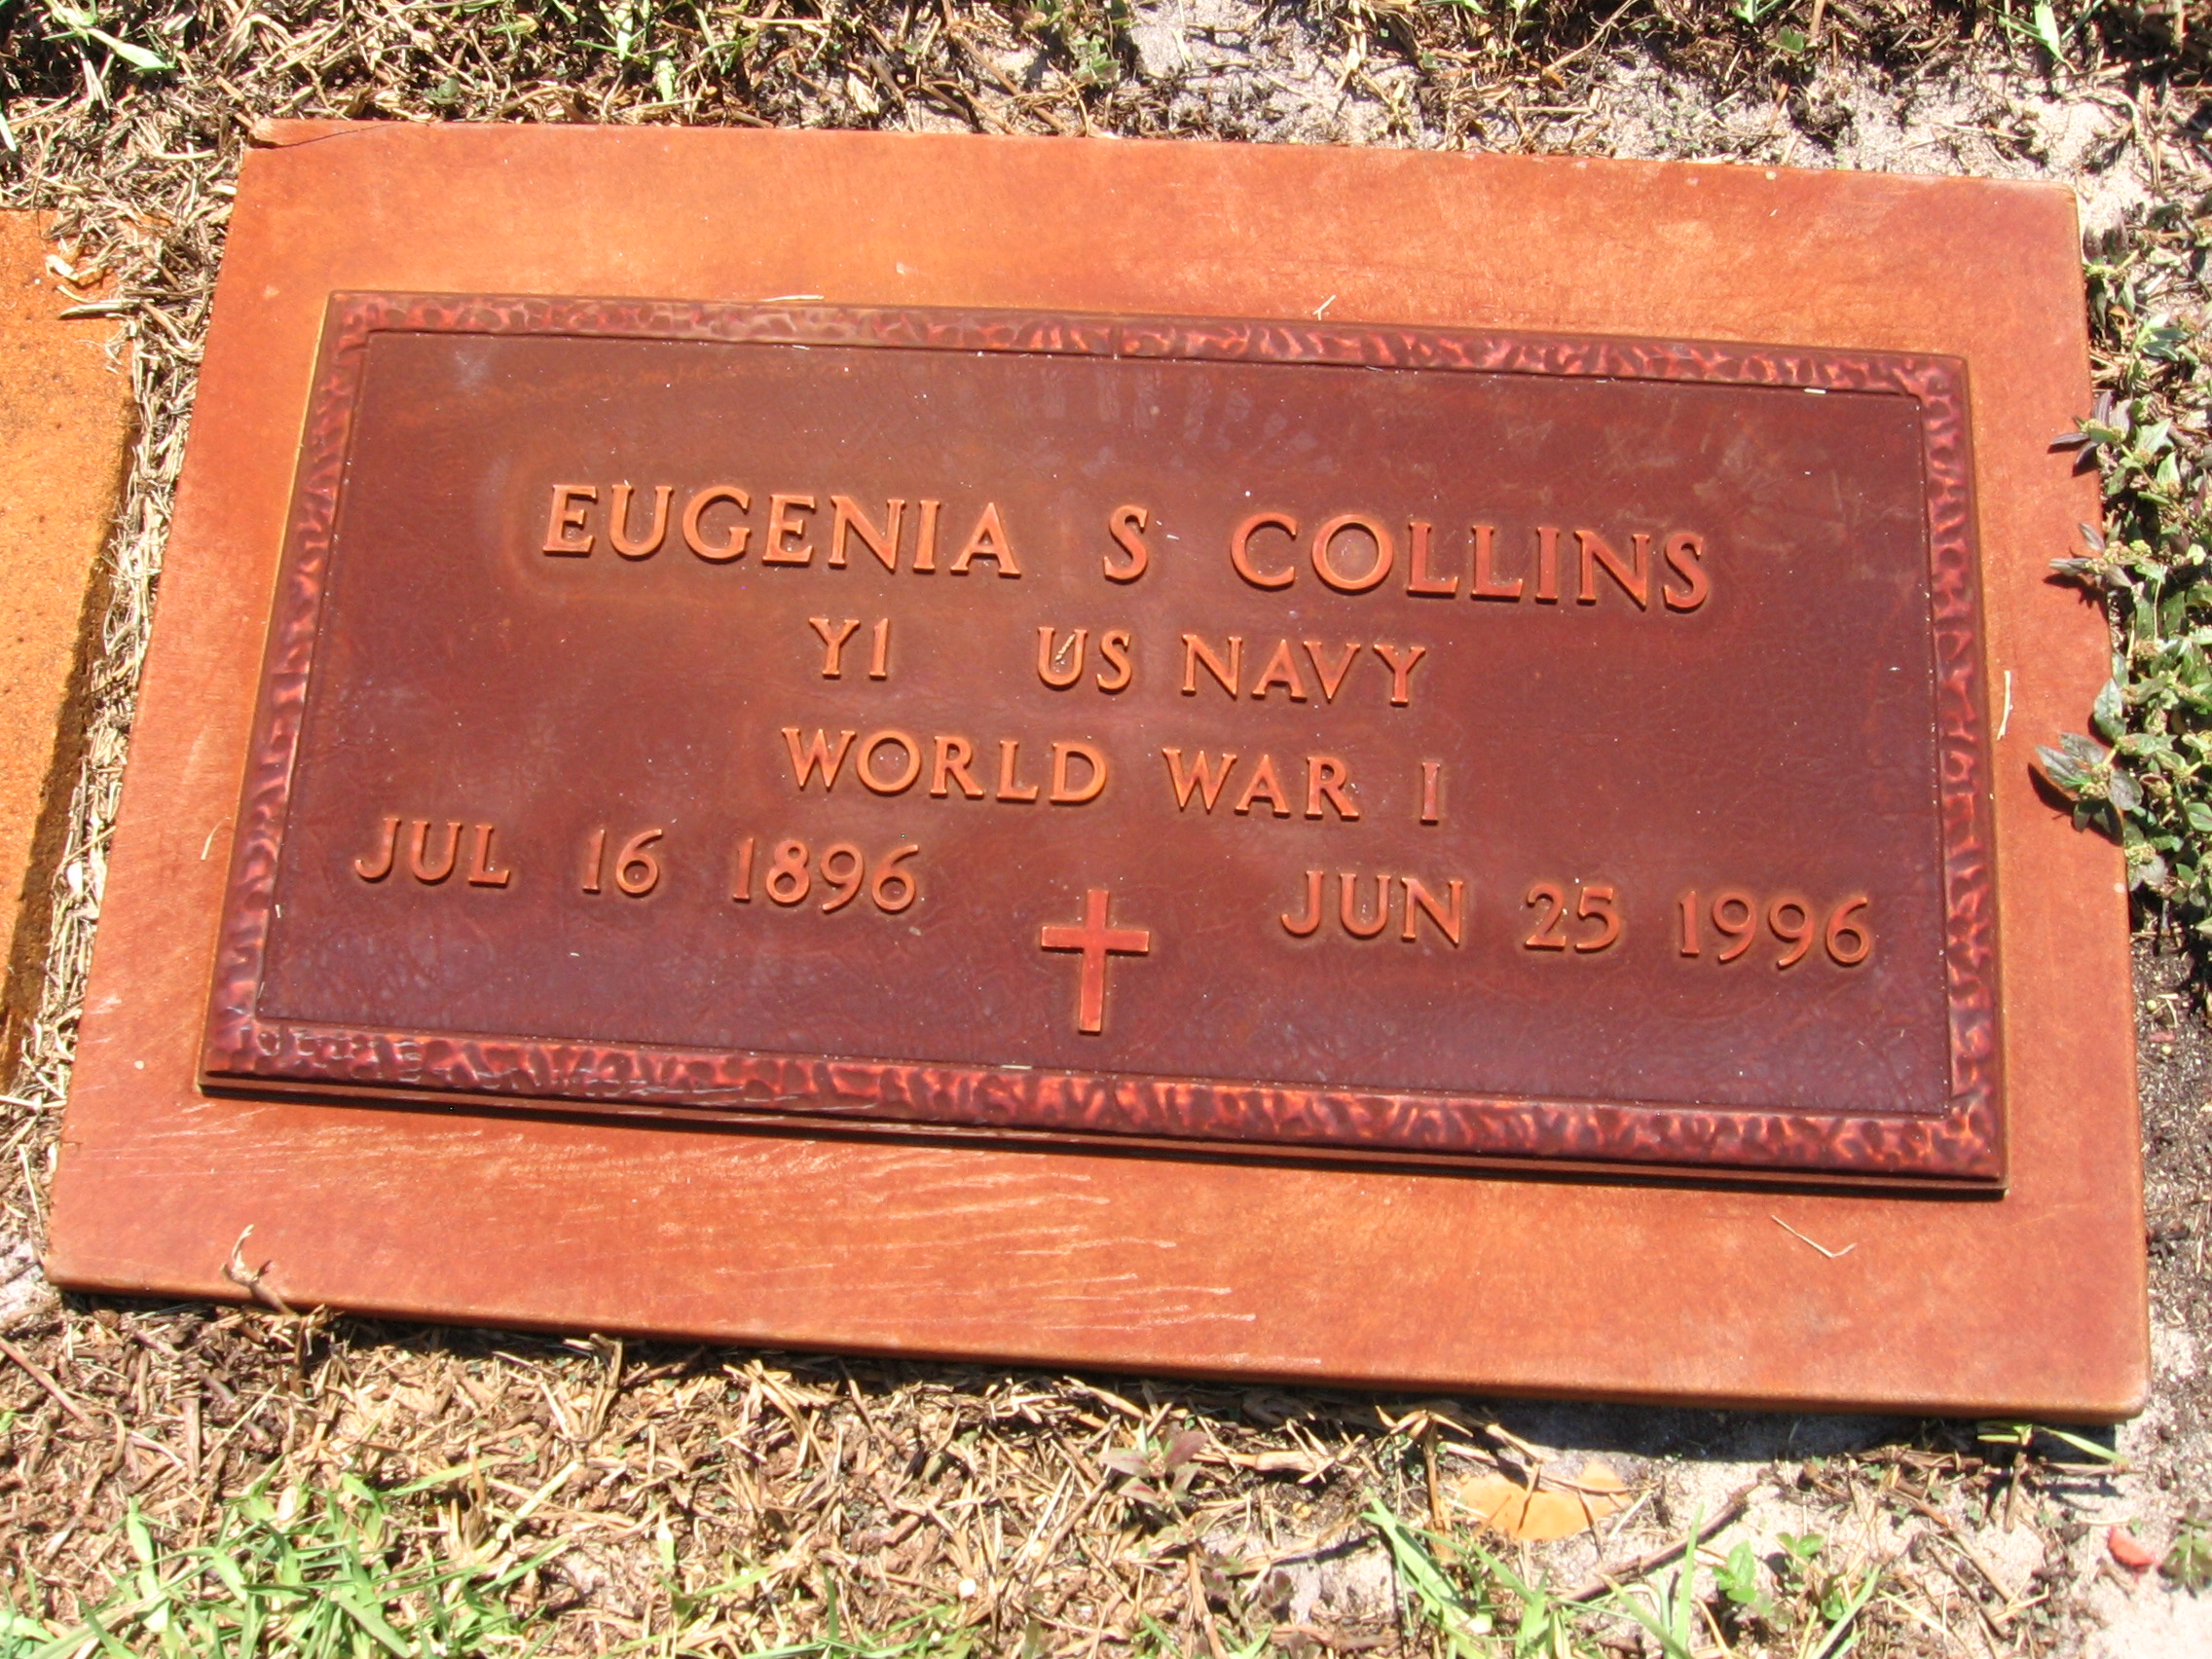 Eugenia S Collins